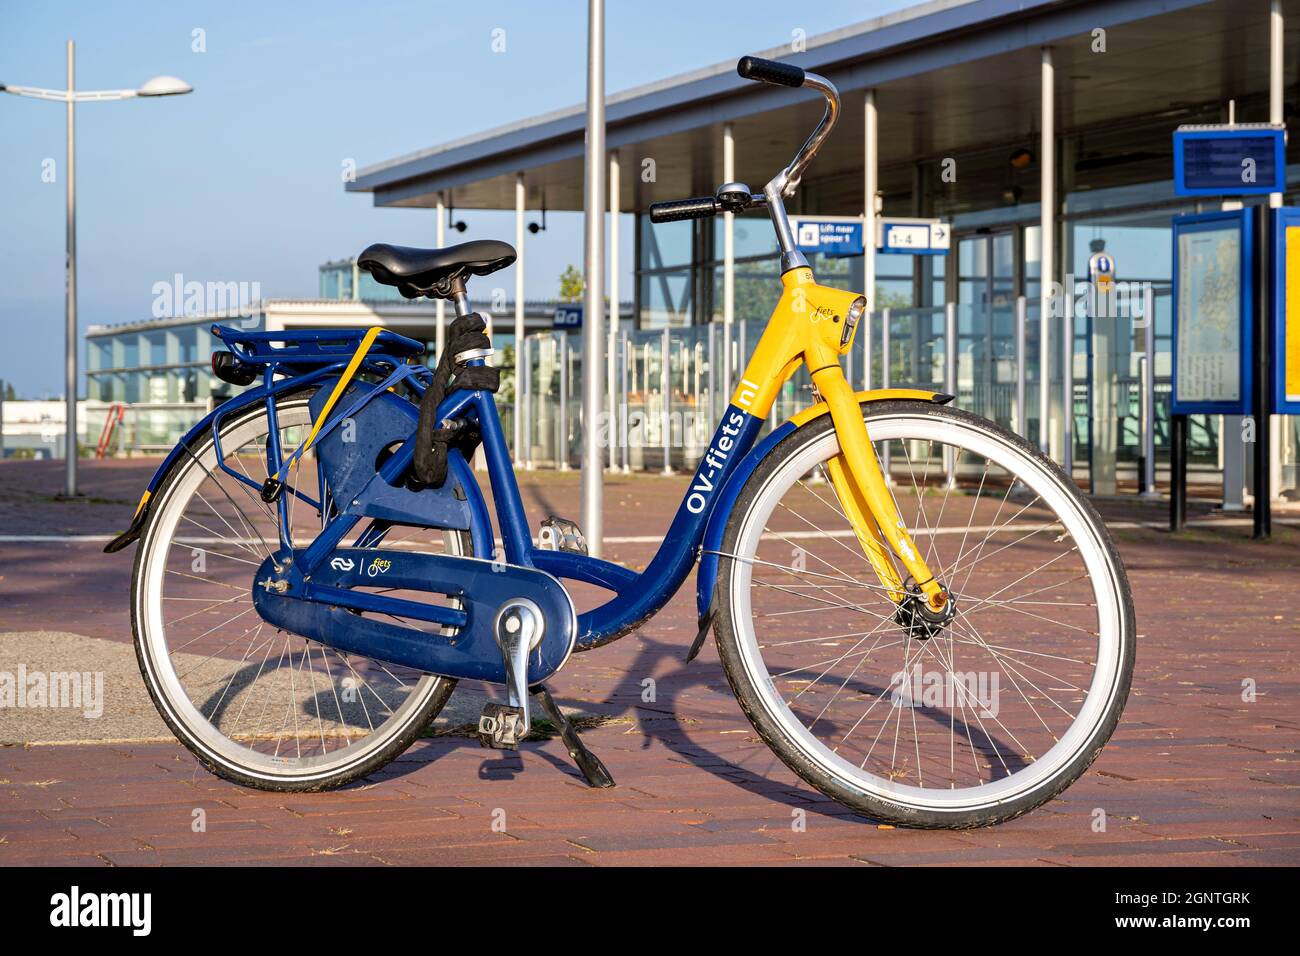 OV-fiets bike at Barendrecht station Stock Photo